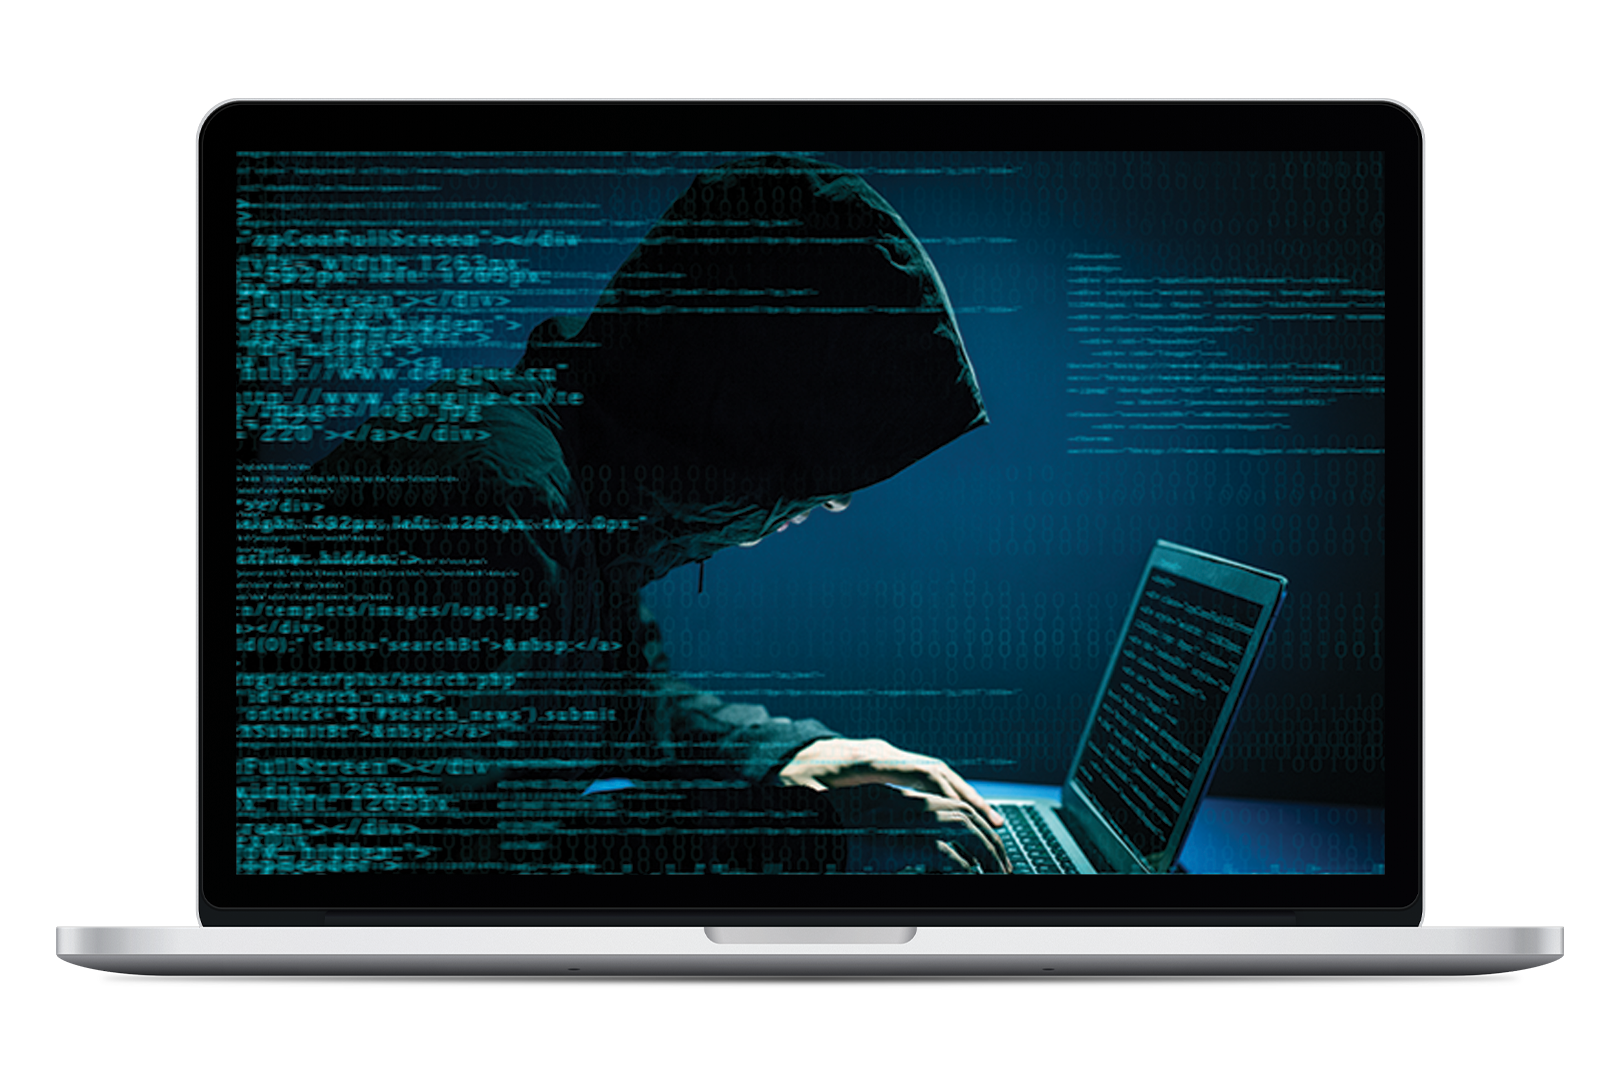 Image of a laptop displaying a hacker stealing data